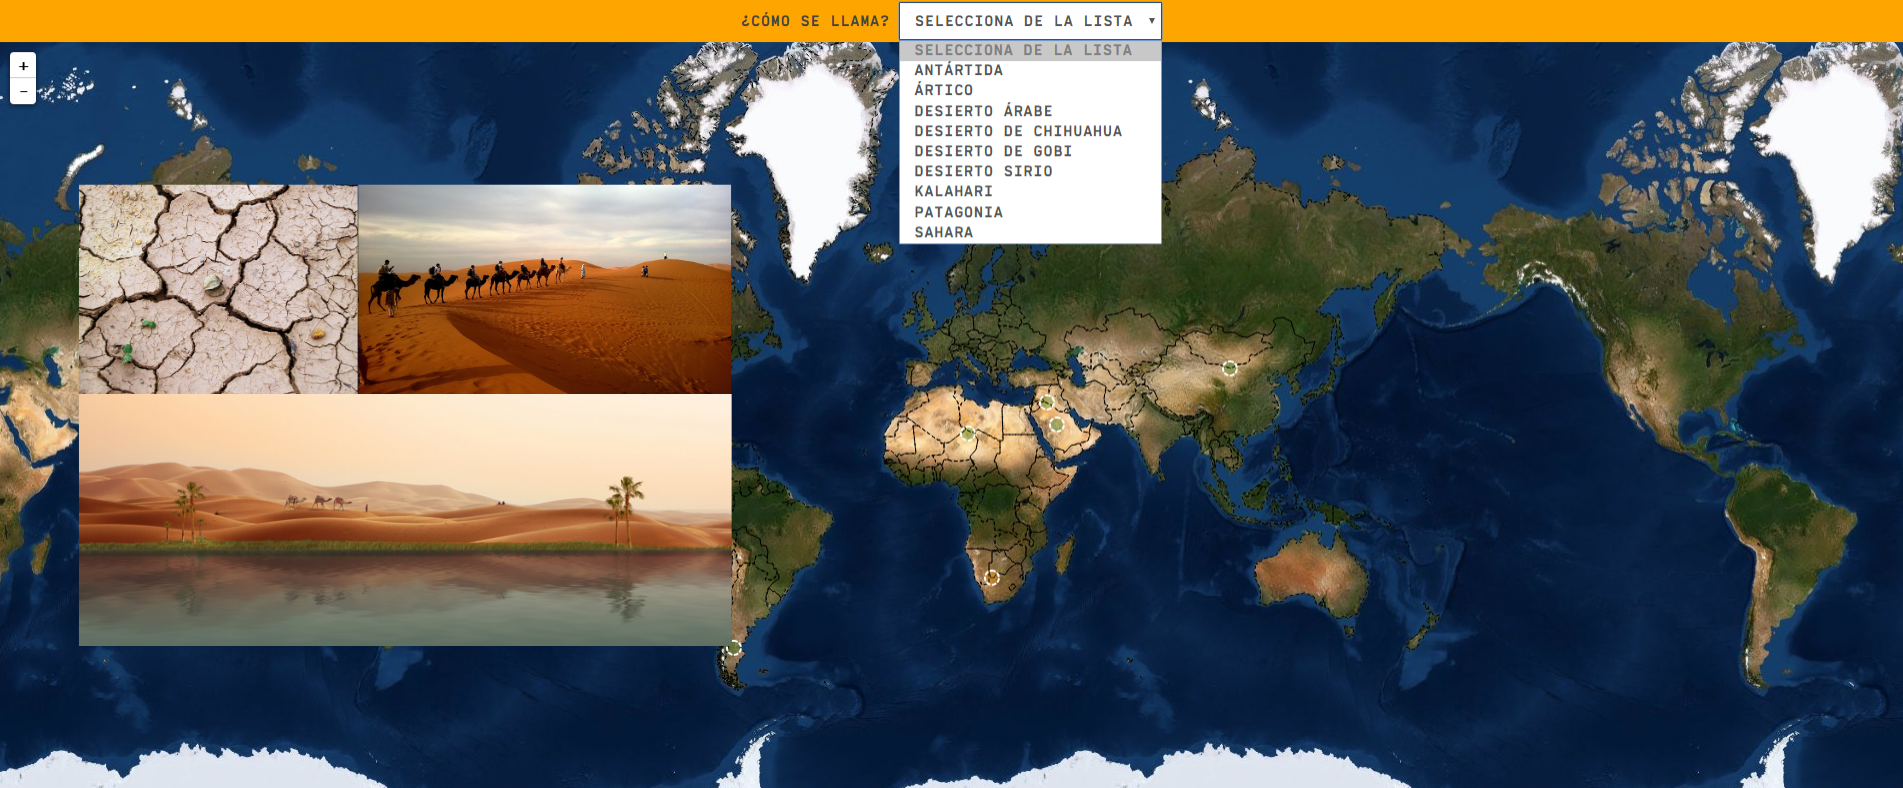 Desertos do mundo (medio)